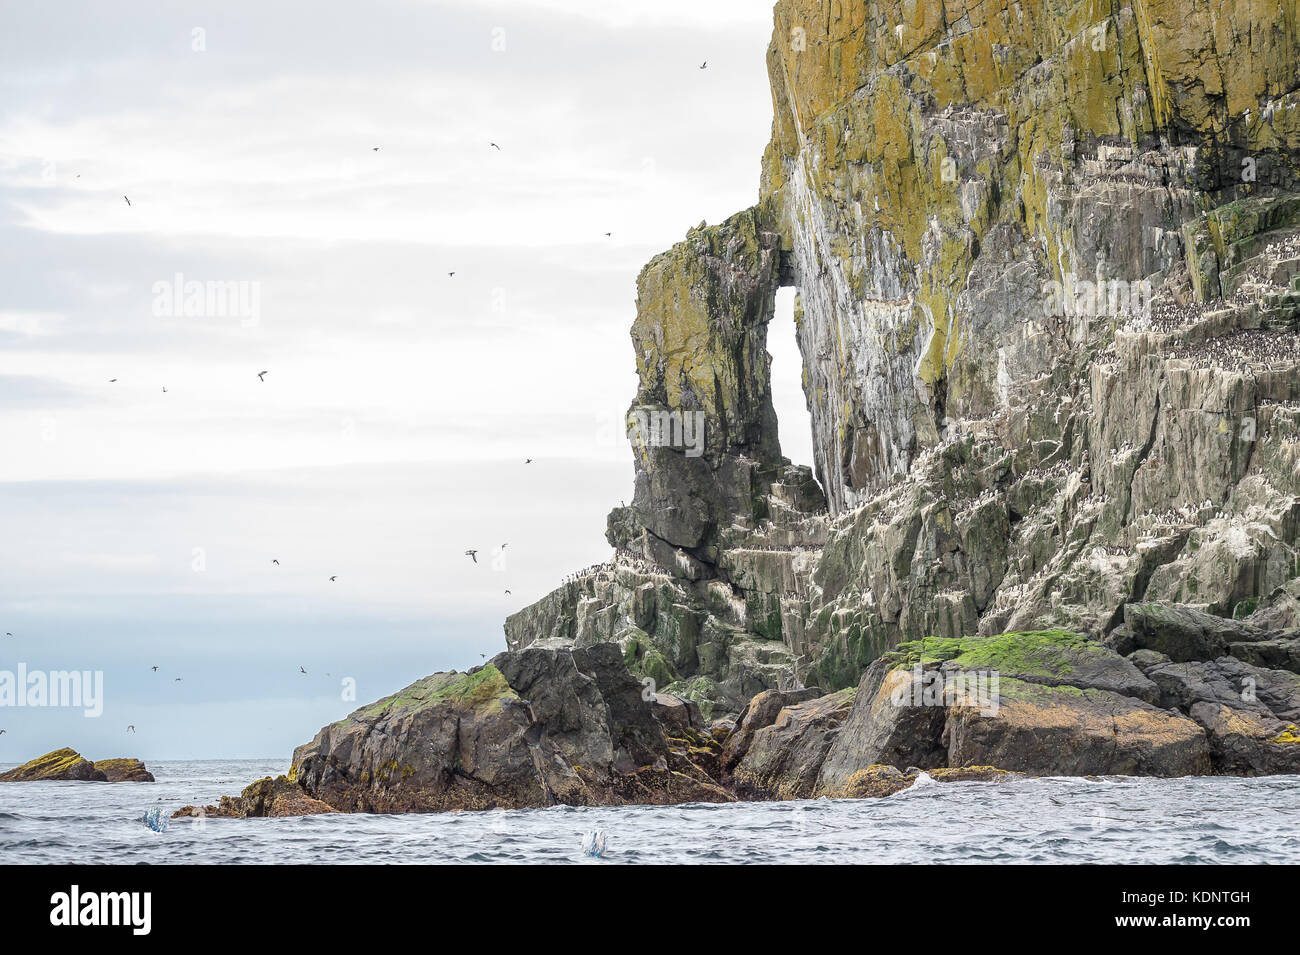 Columnar basalt rock formation with flocks of nesting murre in Semidi Islands, Alaska Stock Photo